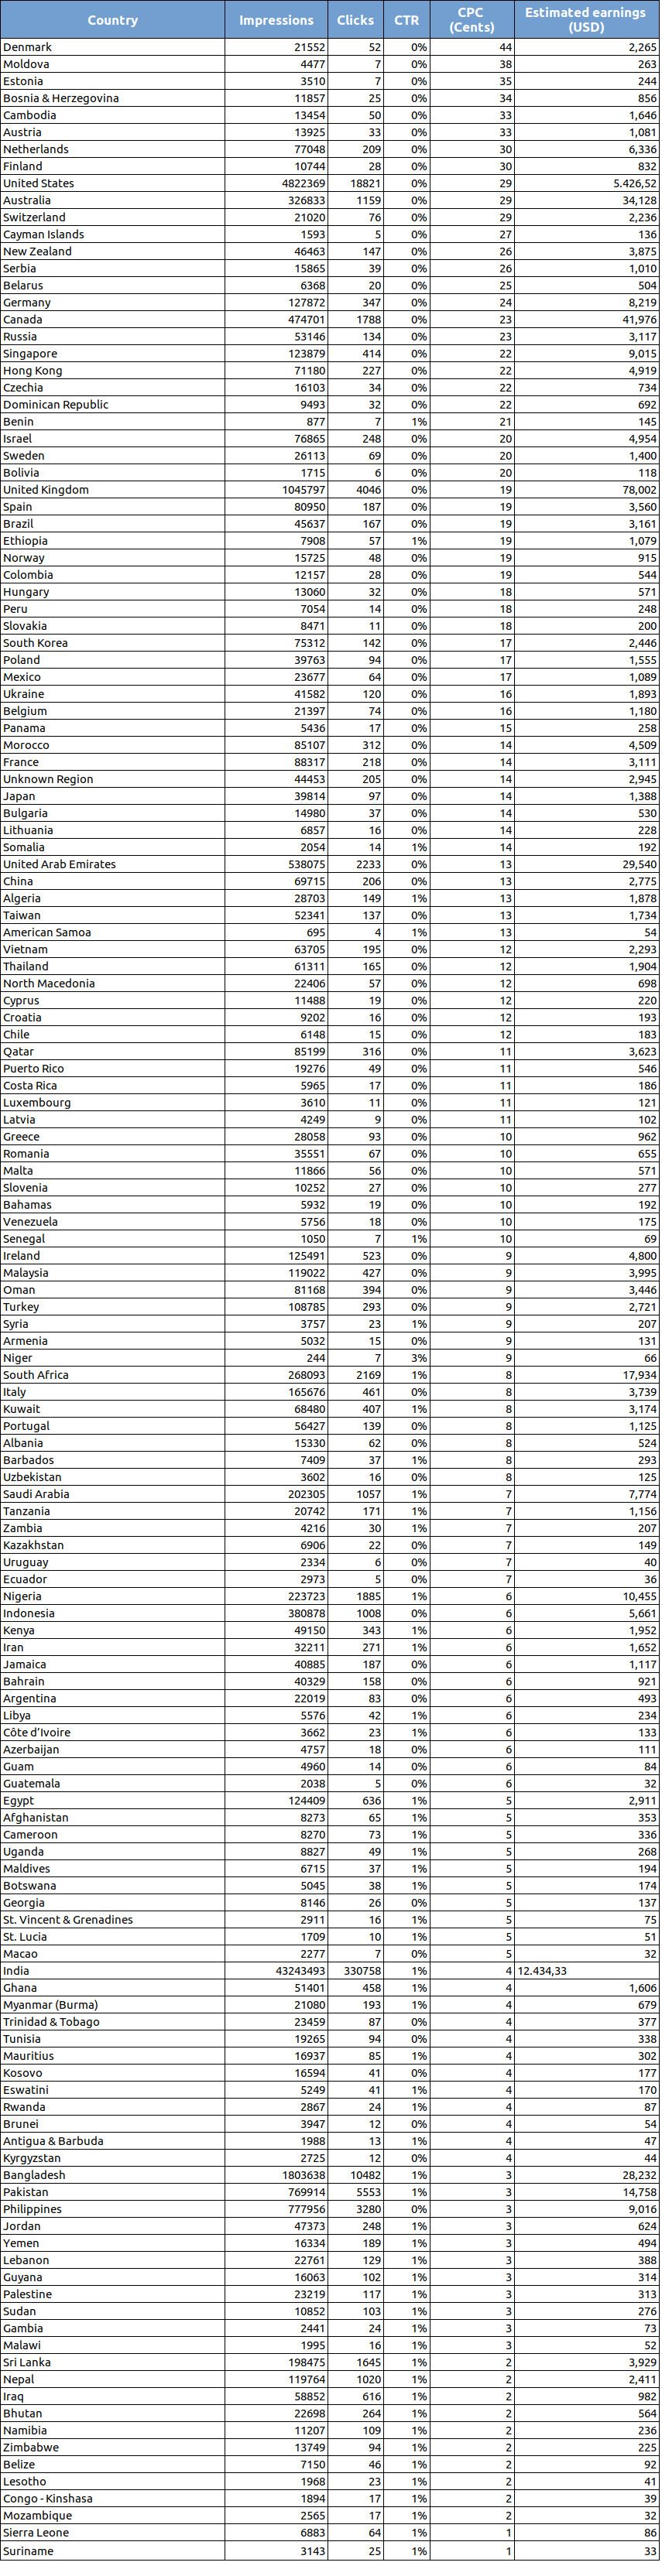 AdSense Cost-per-click (CPC) Rates Per Country - 2020